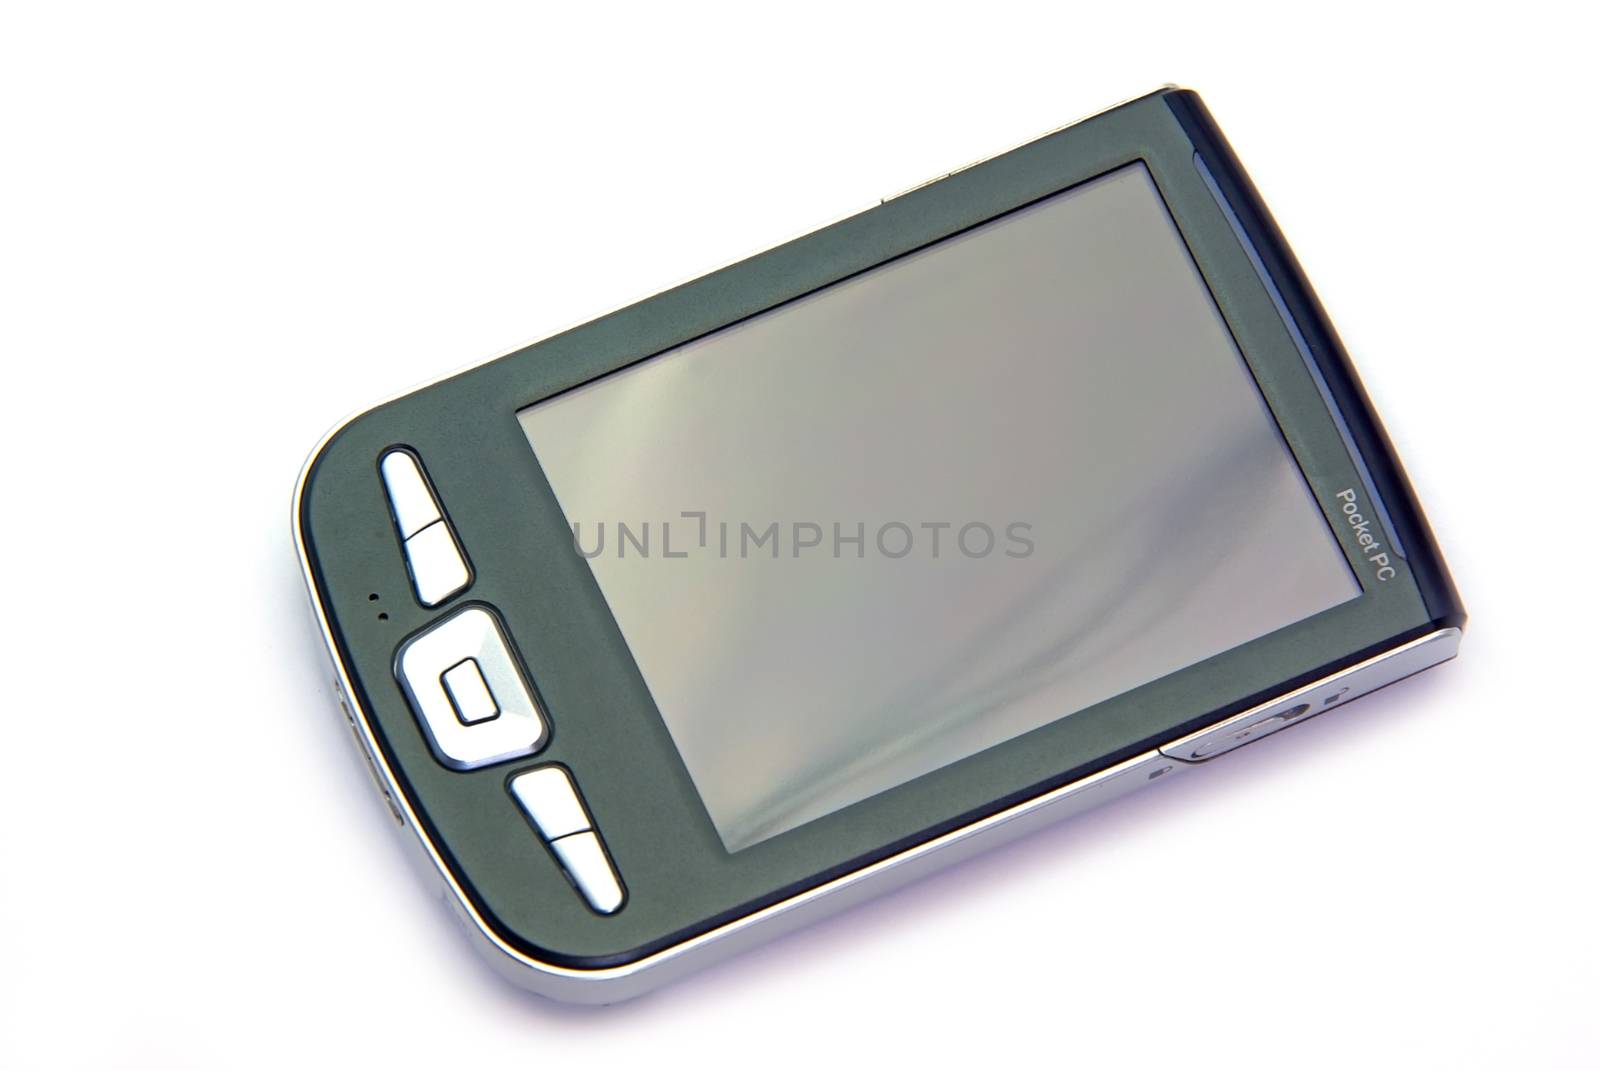 PDA phone by savcoco